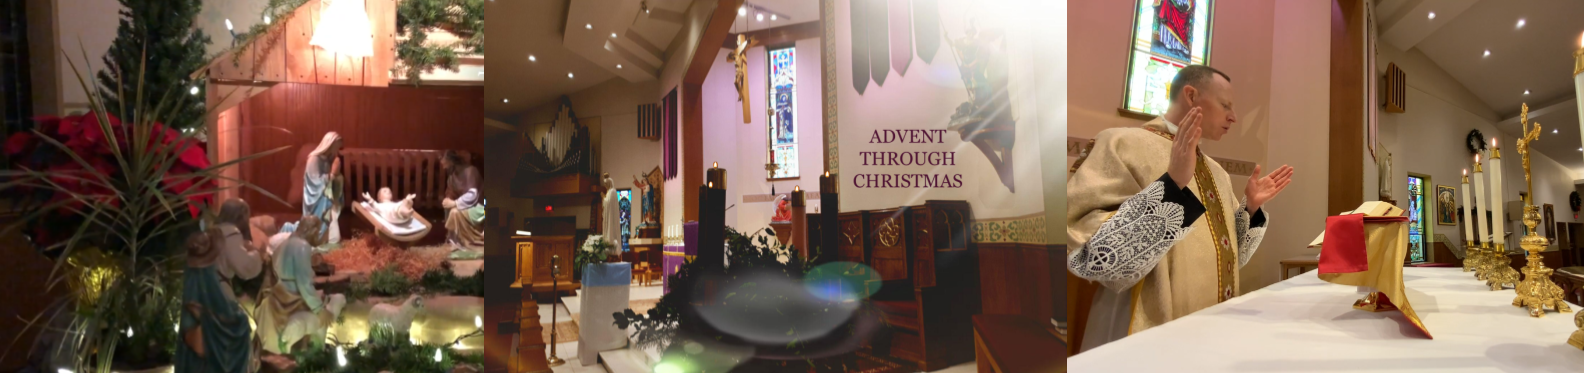 Advent through Christmas